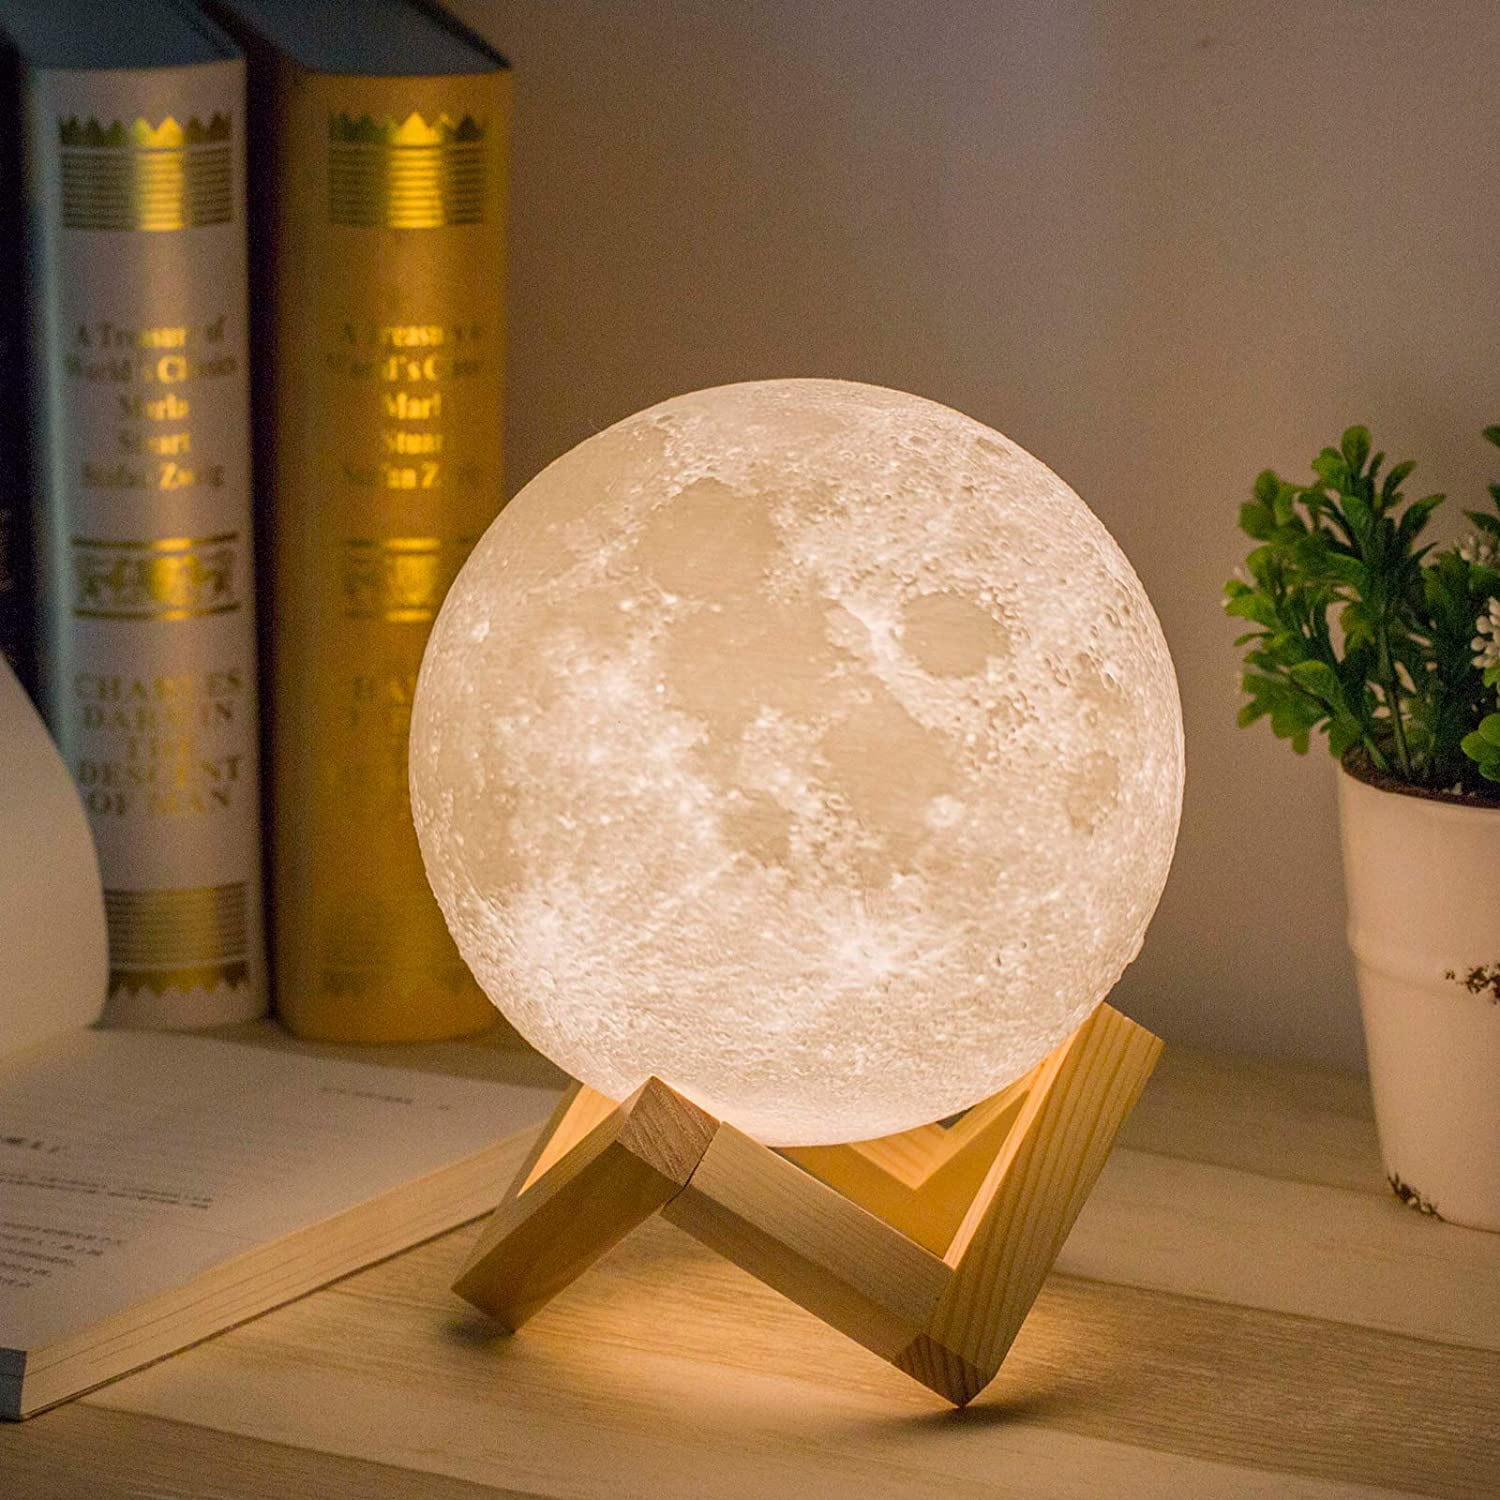 Moon Lamp Night Light Lunar Touch Moonlight 3D Printed Globe LED Desk Lantern 